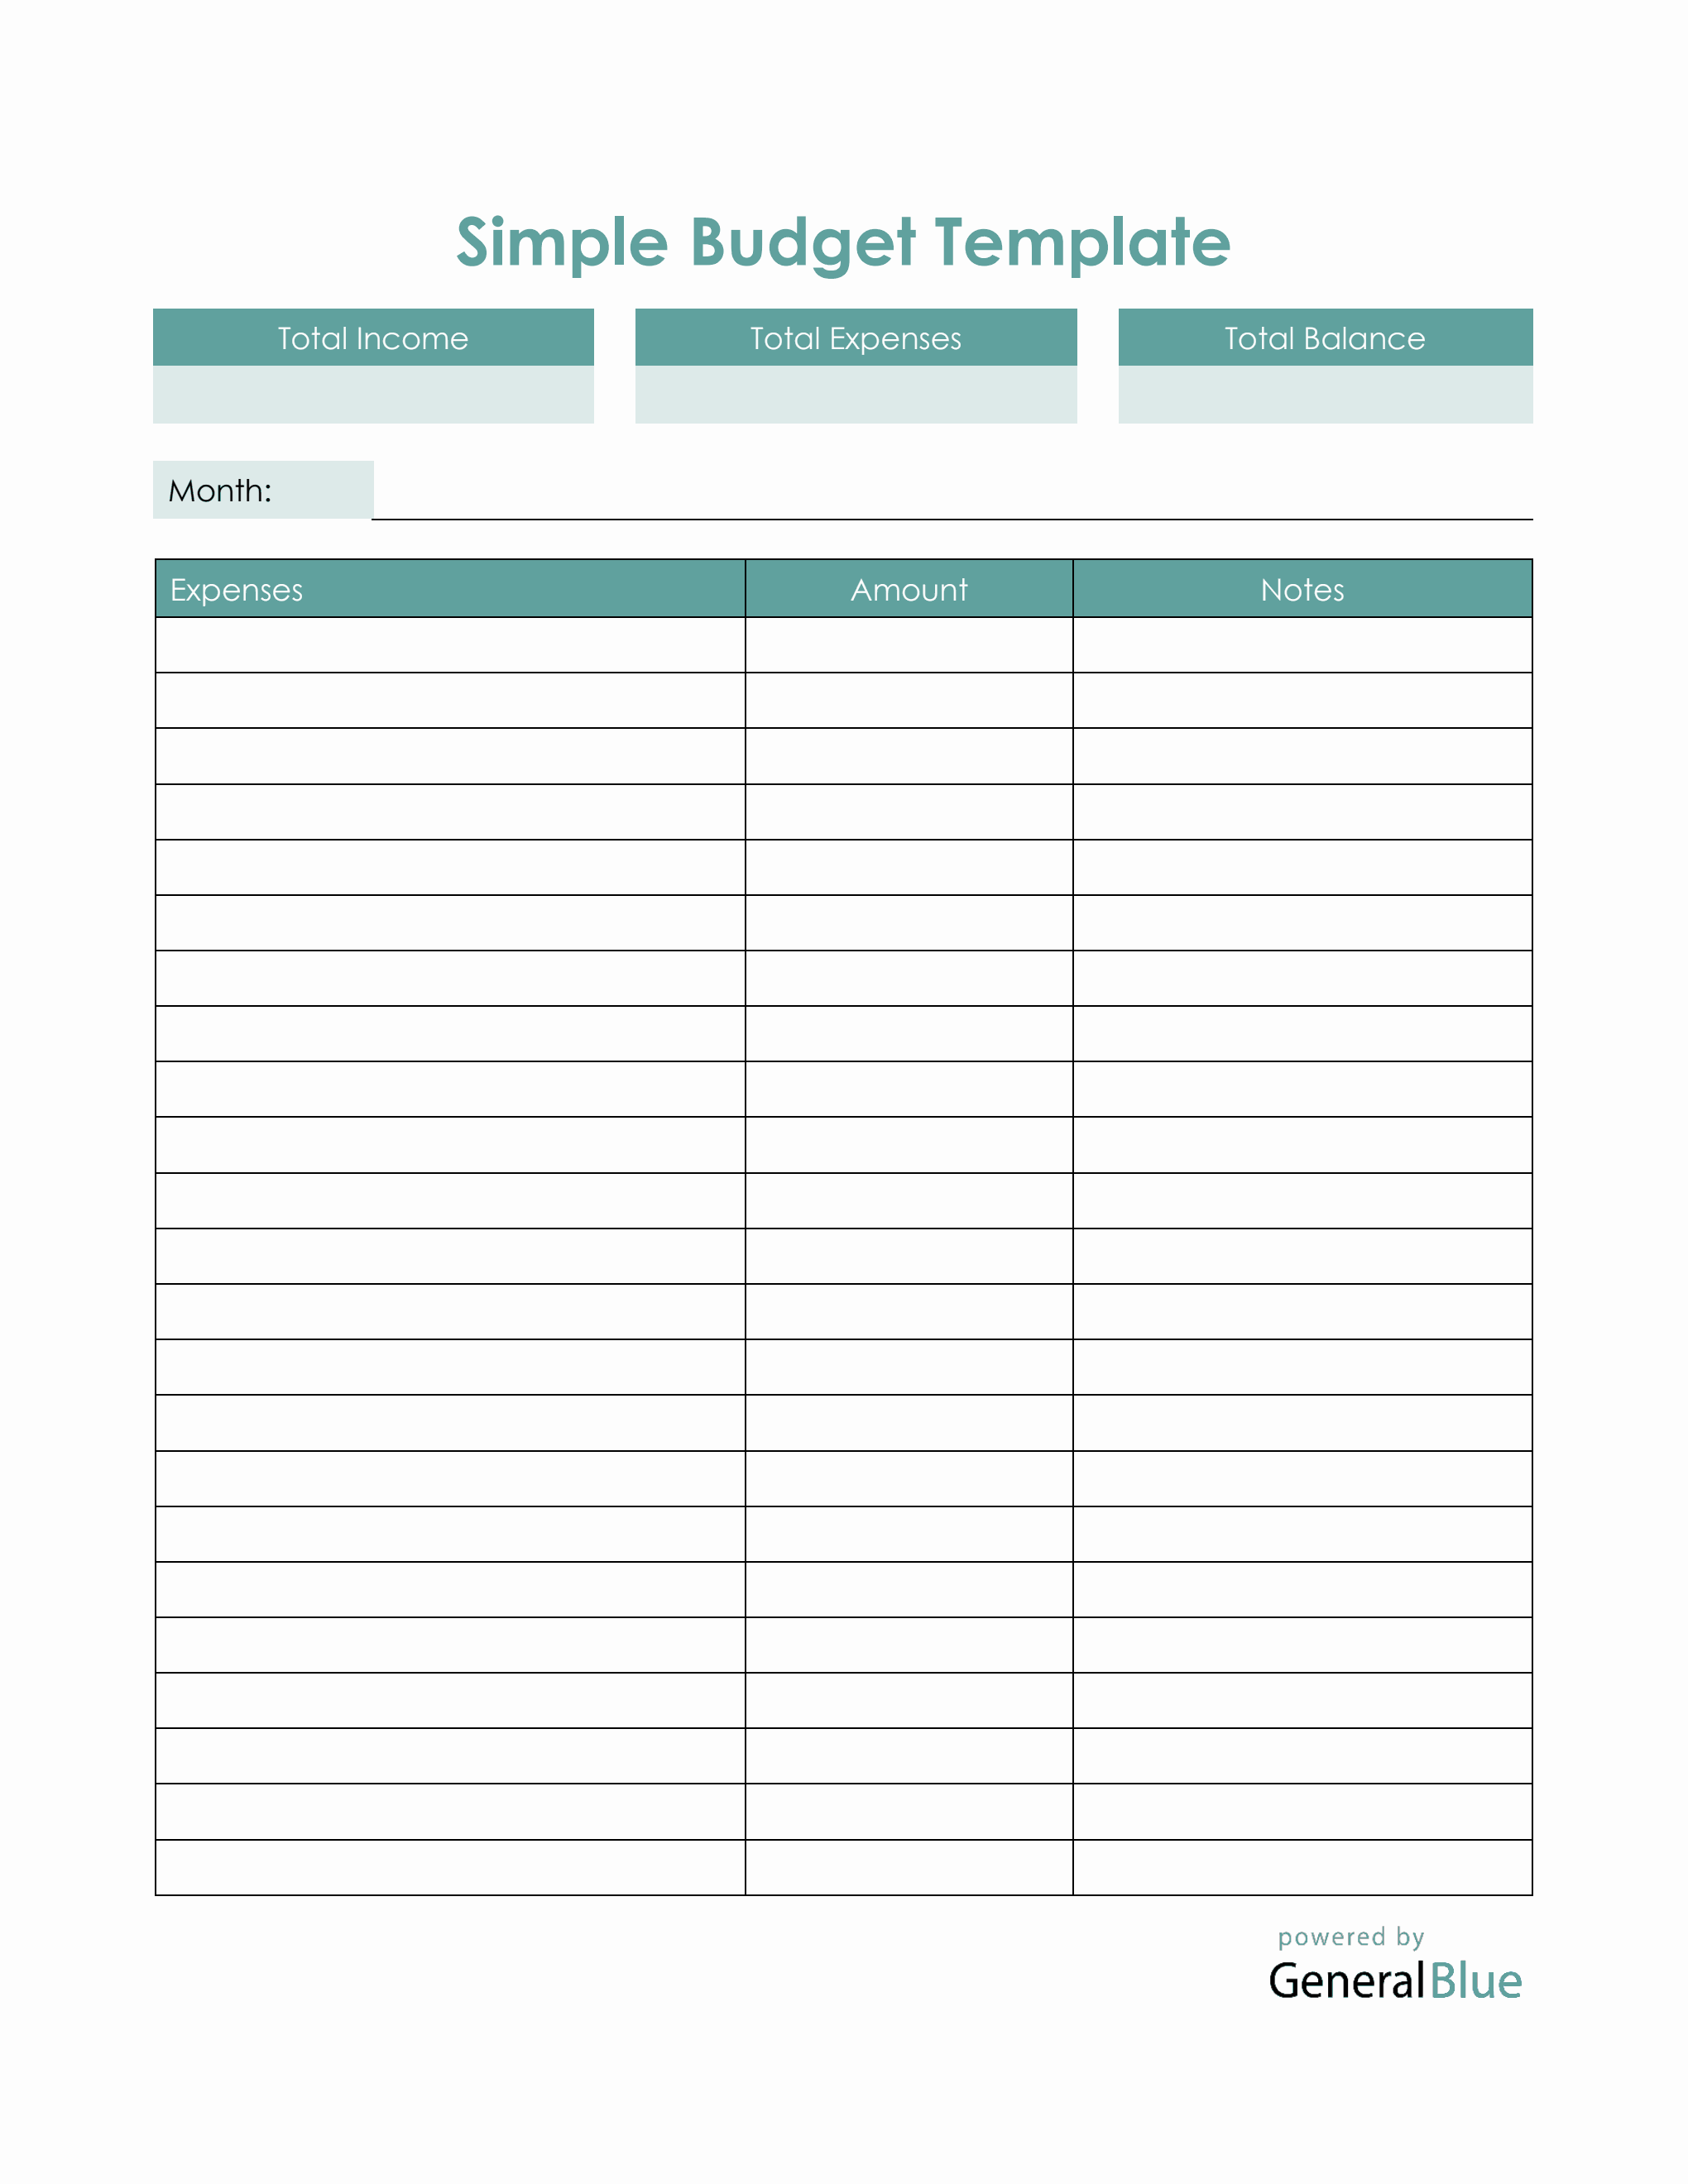 printable-budget-templates-download-pdf-a4-a5-letter-size-paper